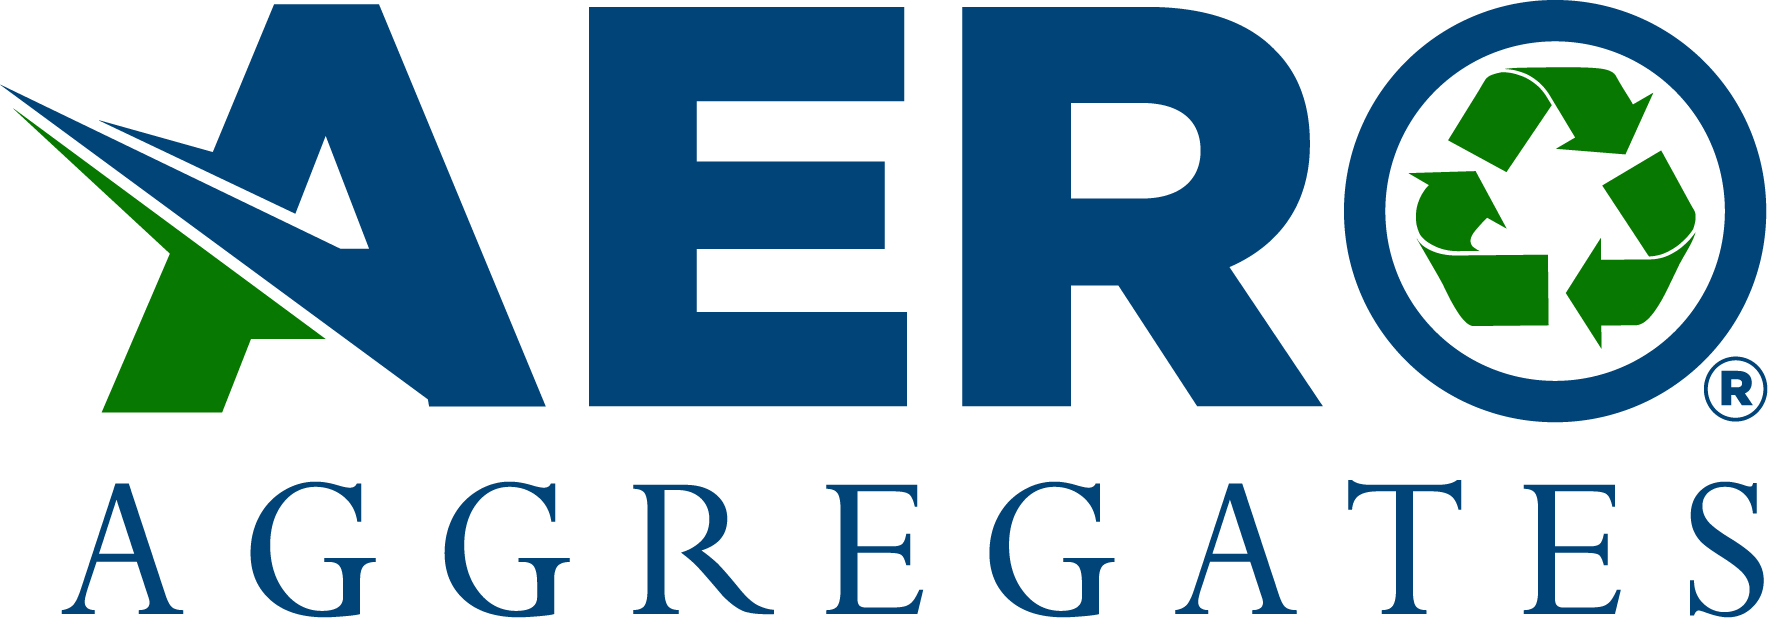 Aero Aggregates logo